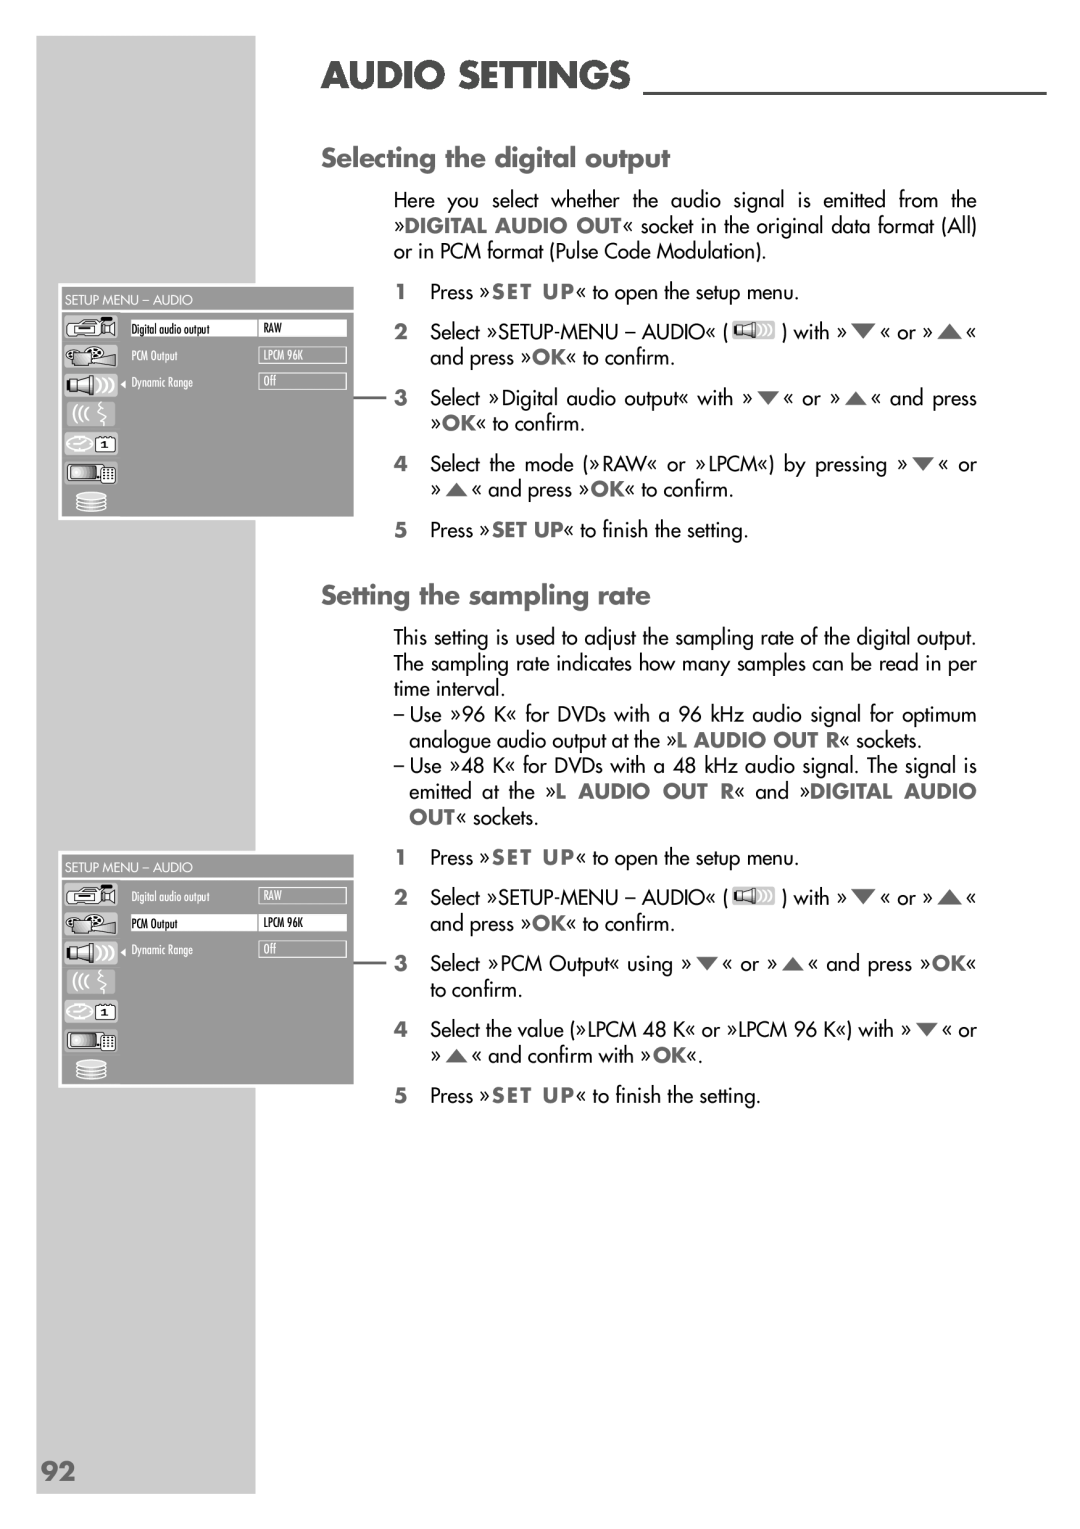 Grundig 5550 HDD manual Audio Settings, Selecting the digital output, Setting the sampling rate 